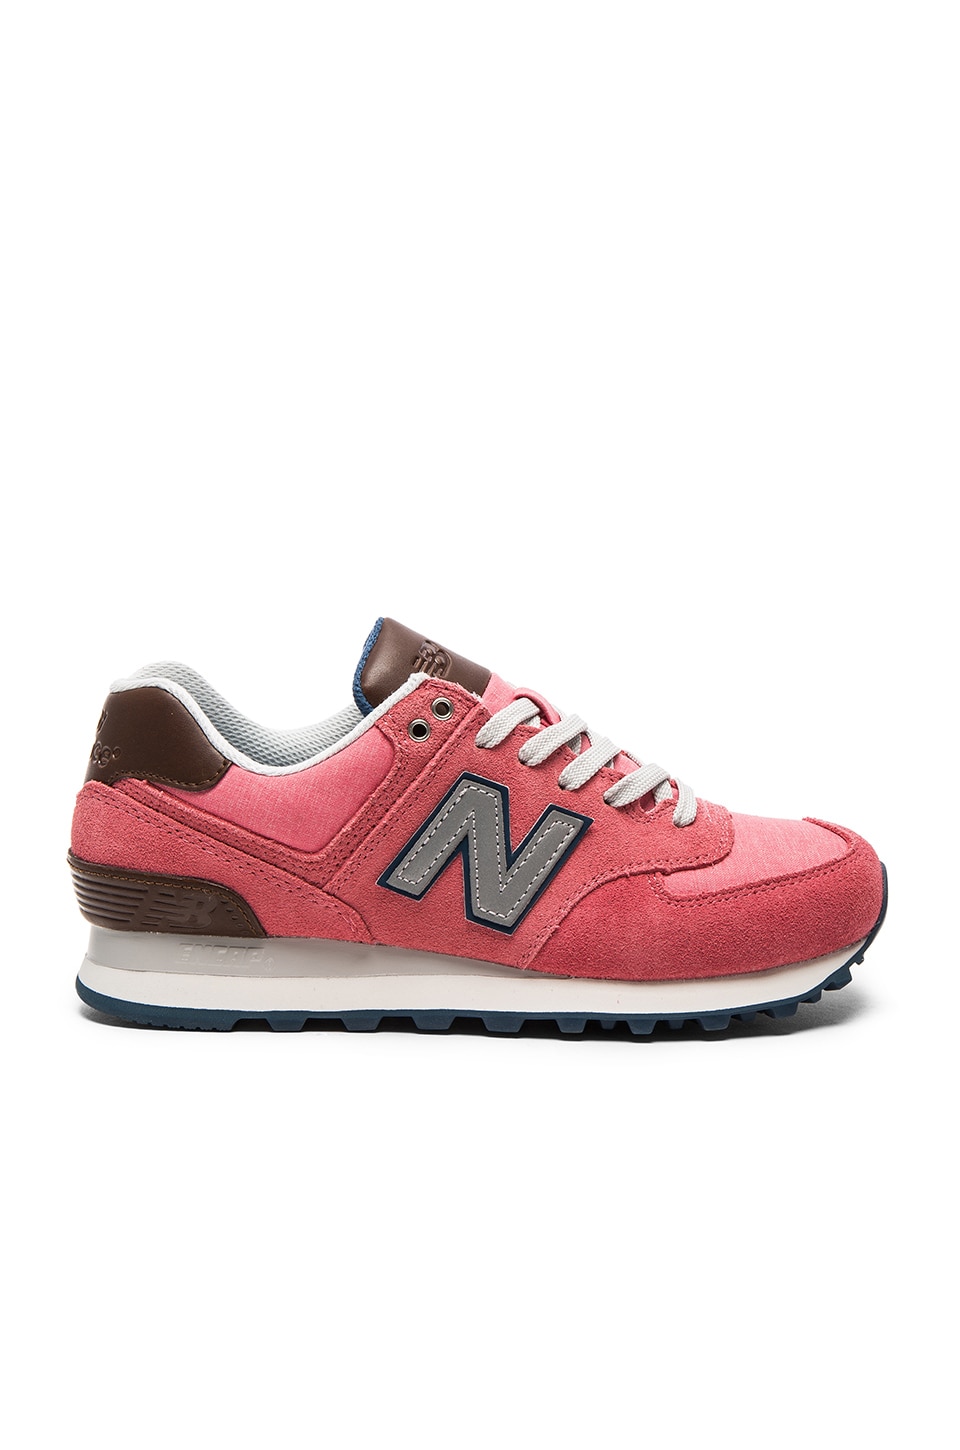 New Balance 574 Cruisin' Sneaker in Mineral Pink & Grey | REVOLVE